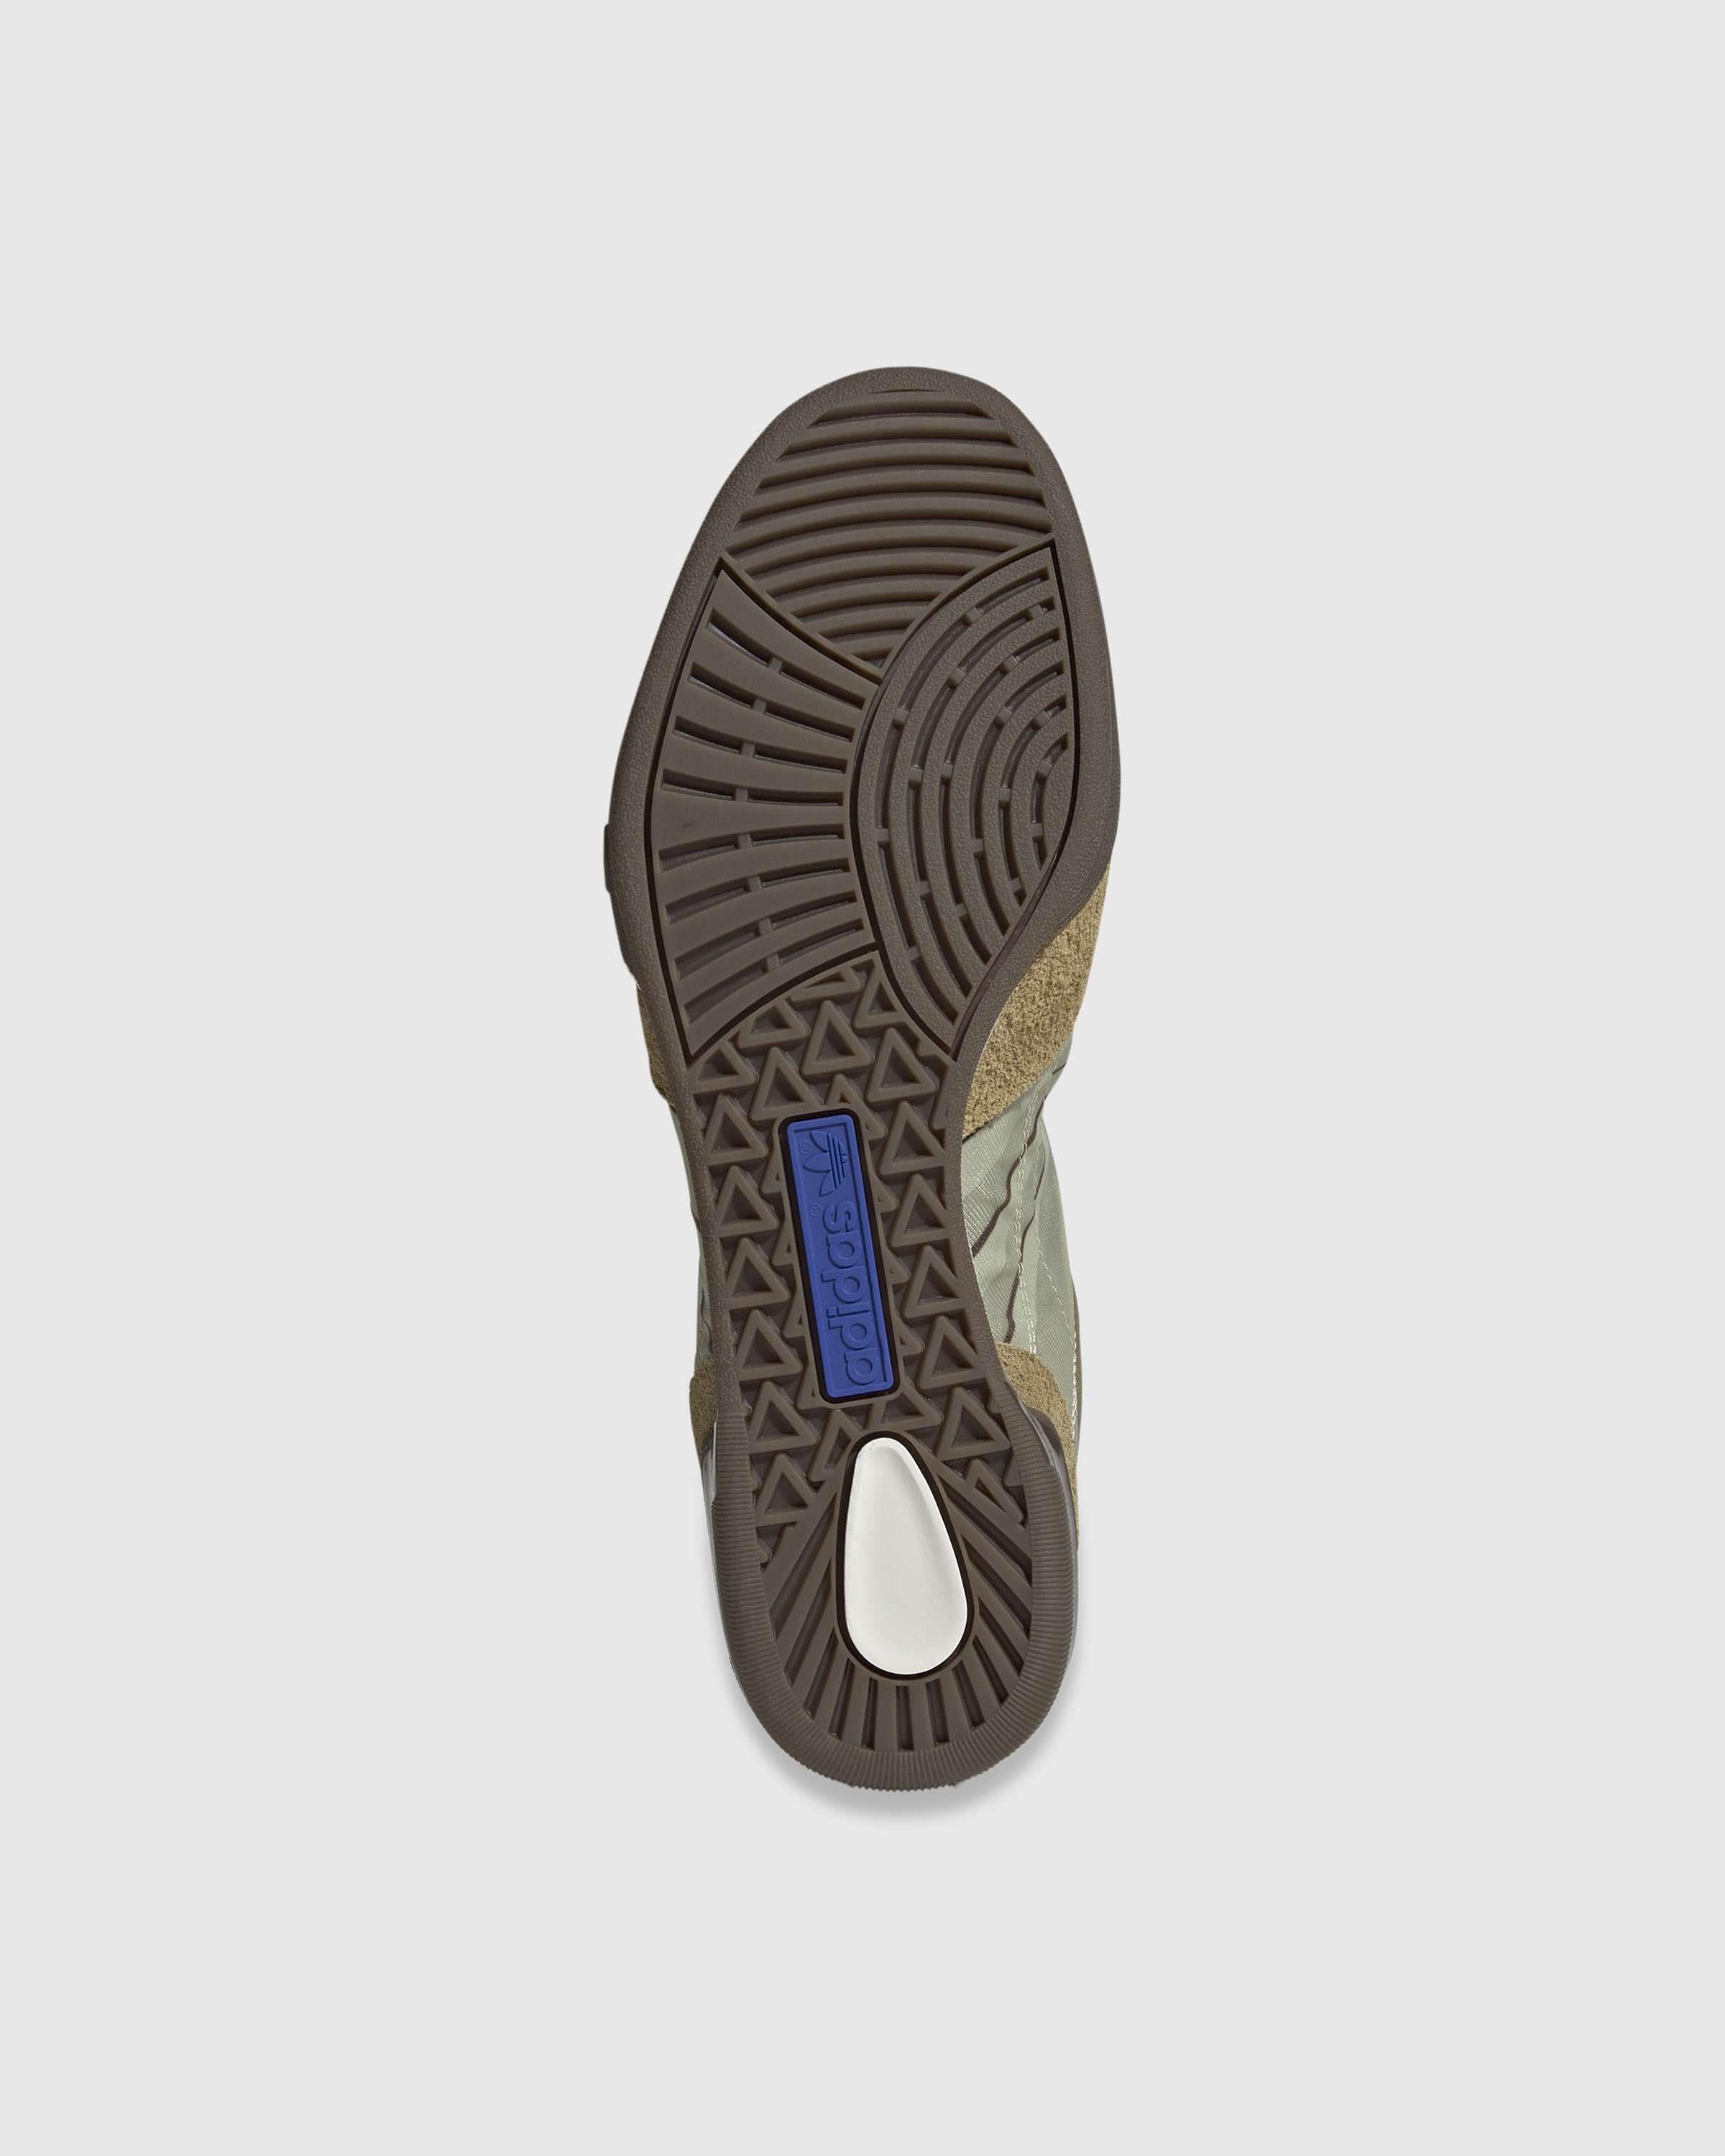 Adidas x Craig Green – Squash Polta Akh Dark Brown/Core Black/Blue - Low Top Sneakers - Brown - Image 6